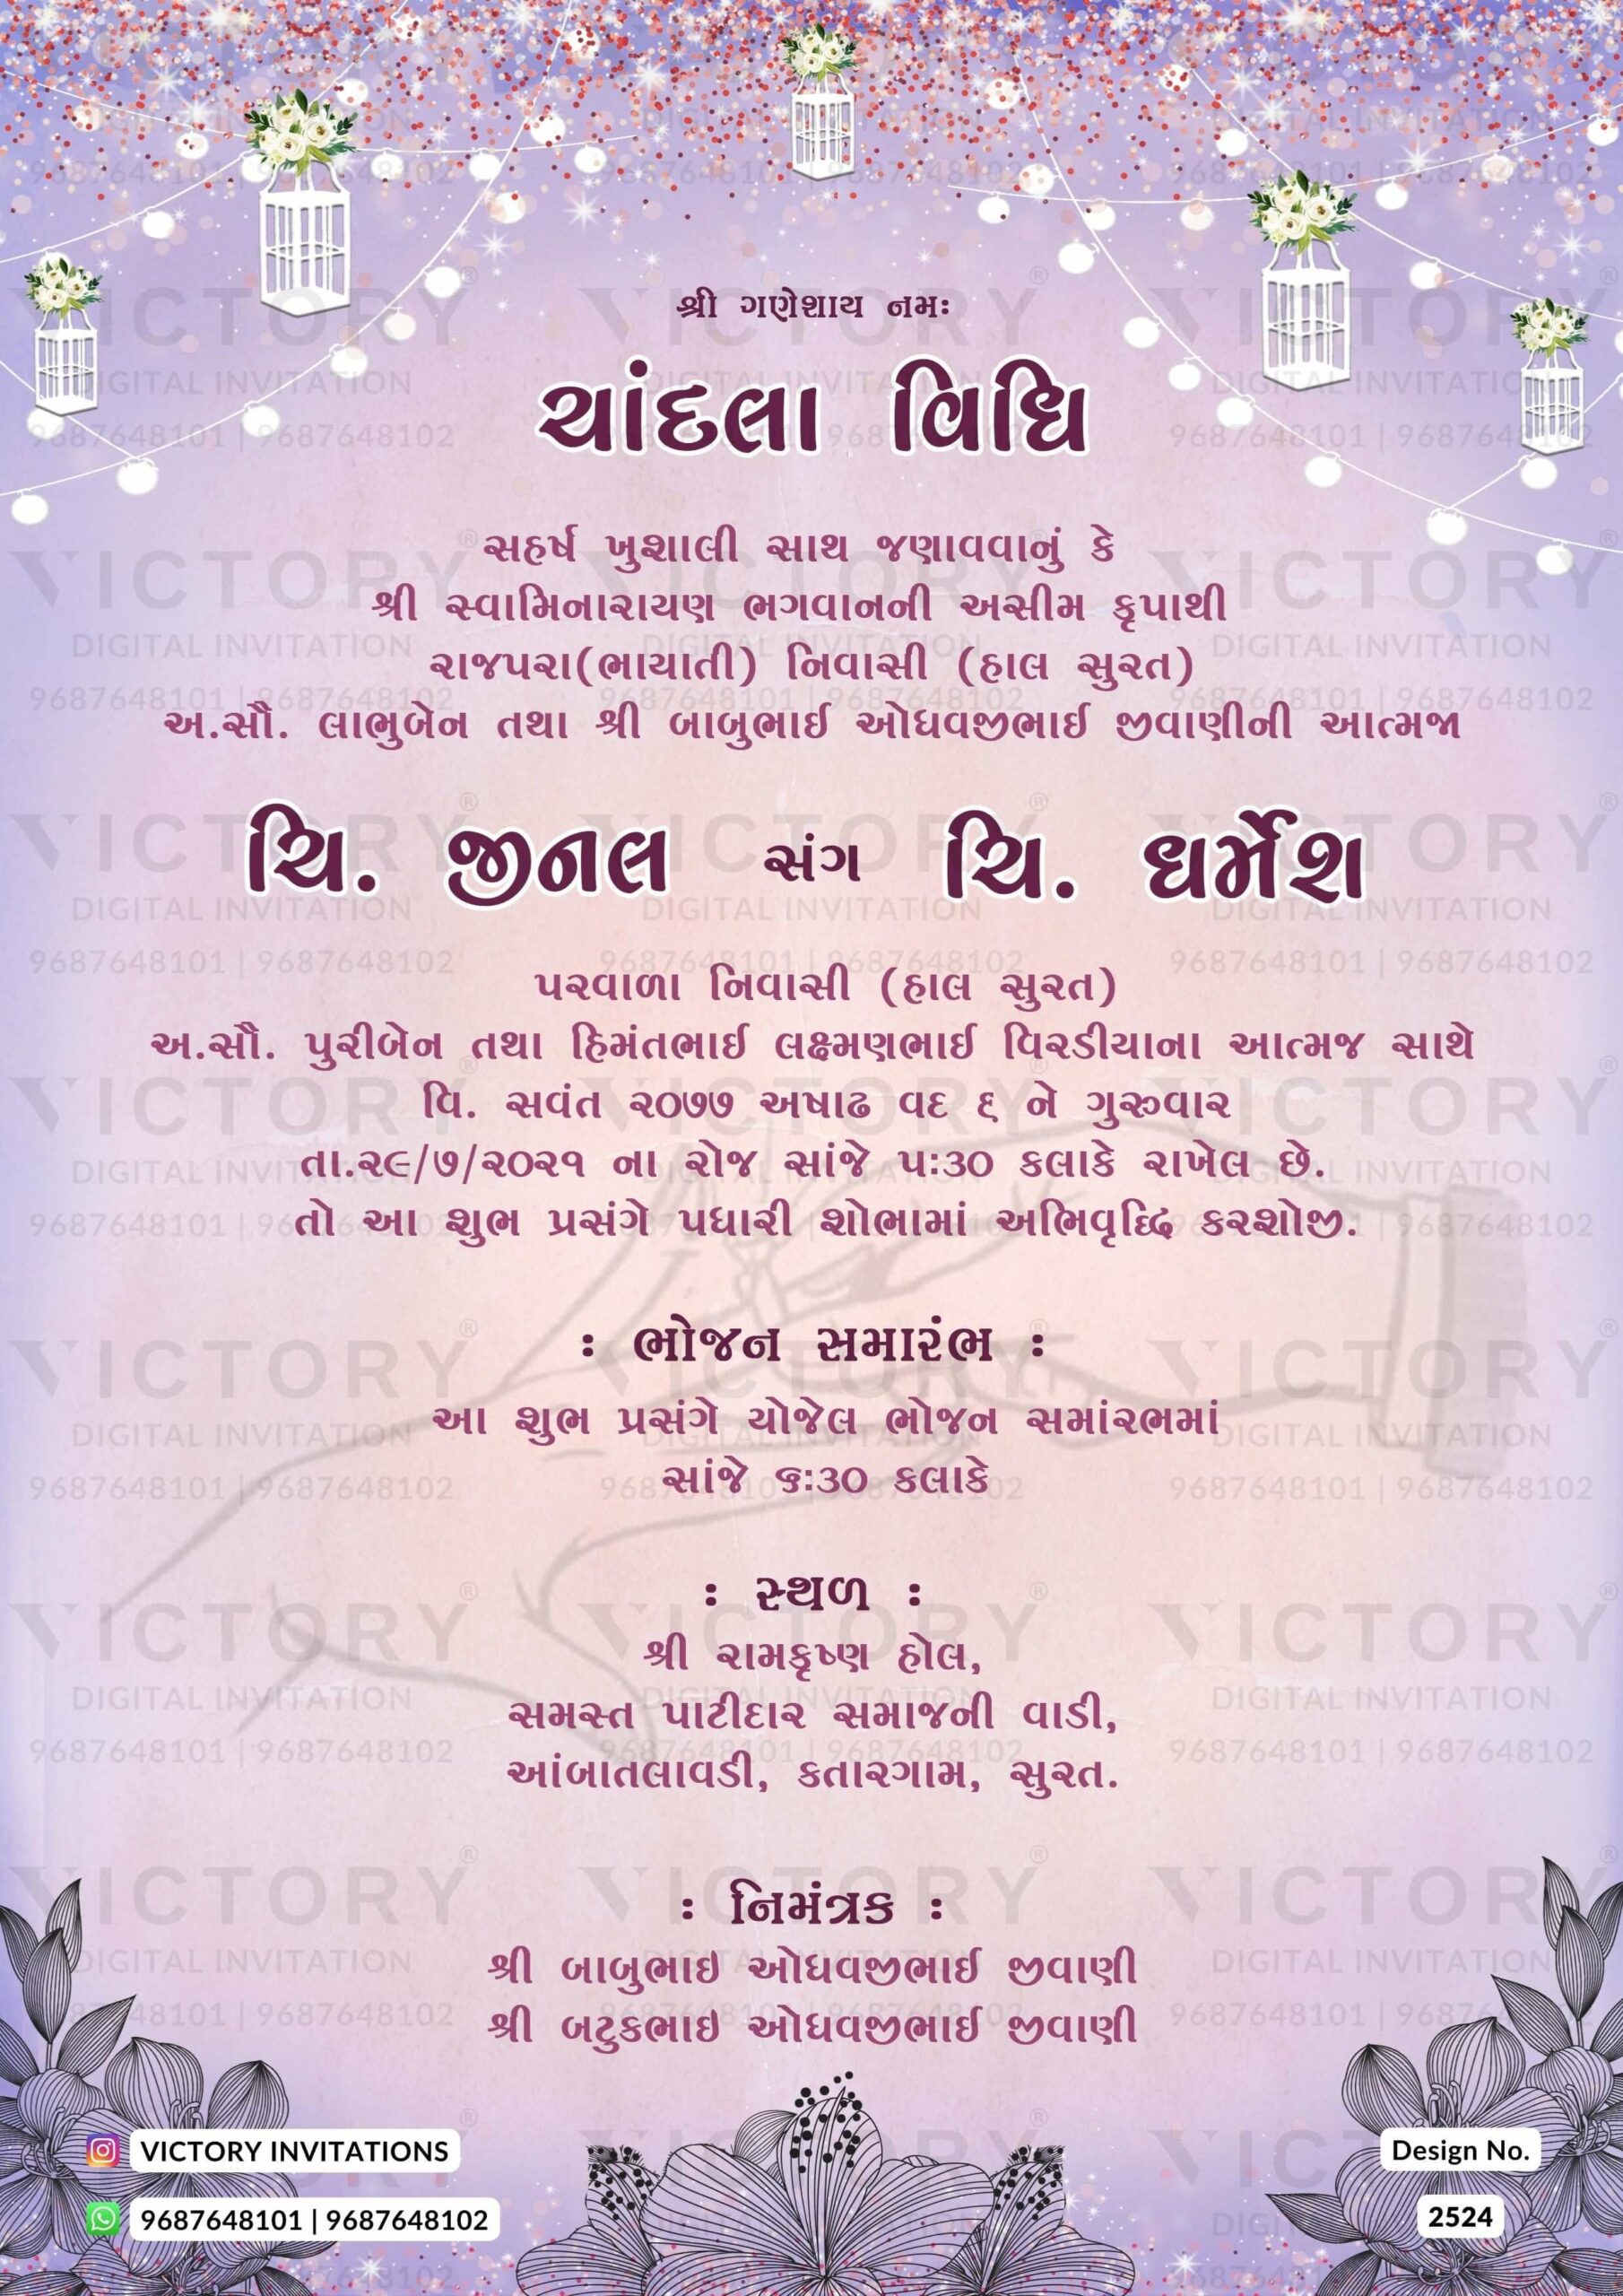 purple color romantic theme digital engagement invitation card in Gujarati language design 2524